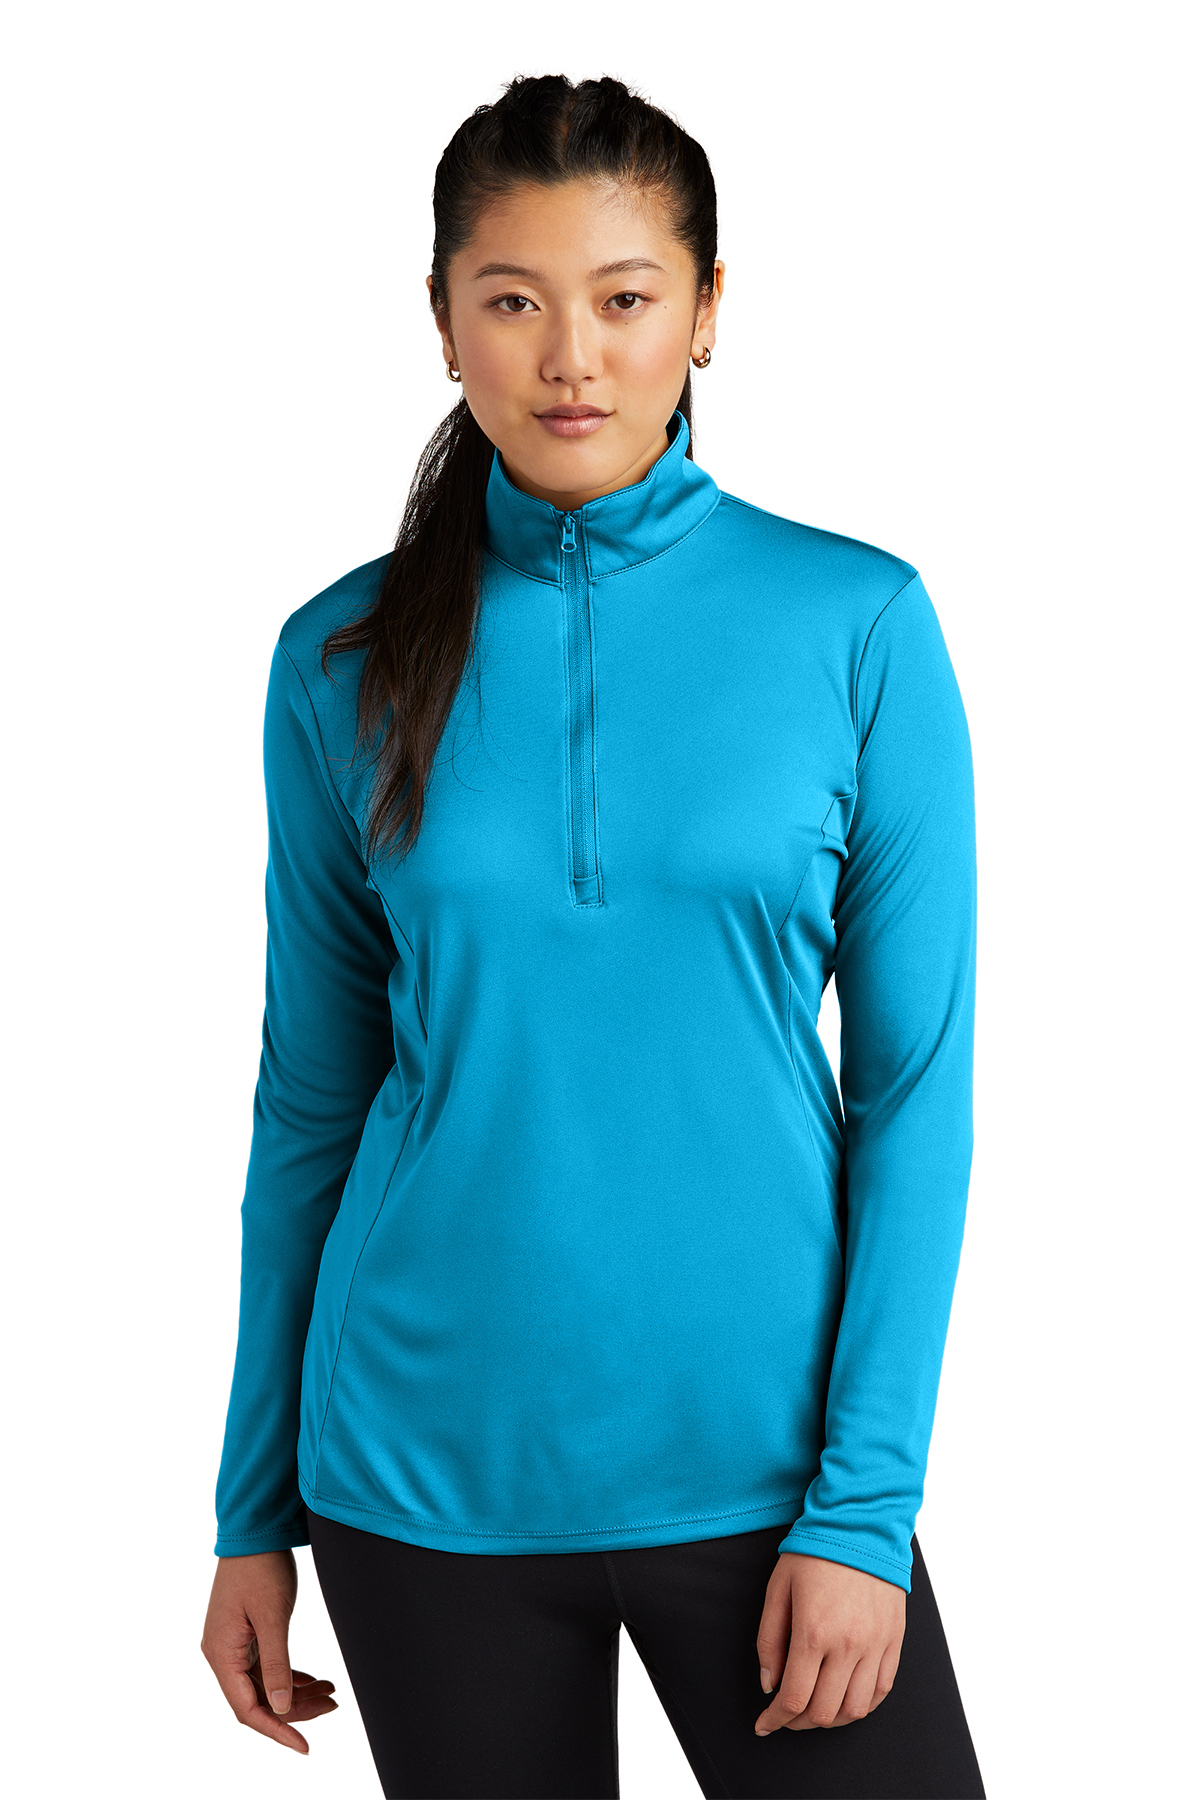 507 – Sport Weight Bouncy – as Yarn or in Kit – Blue Green